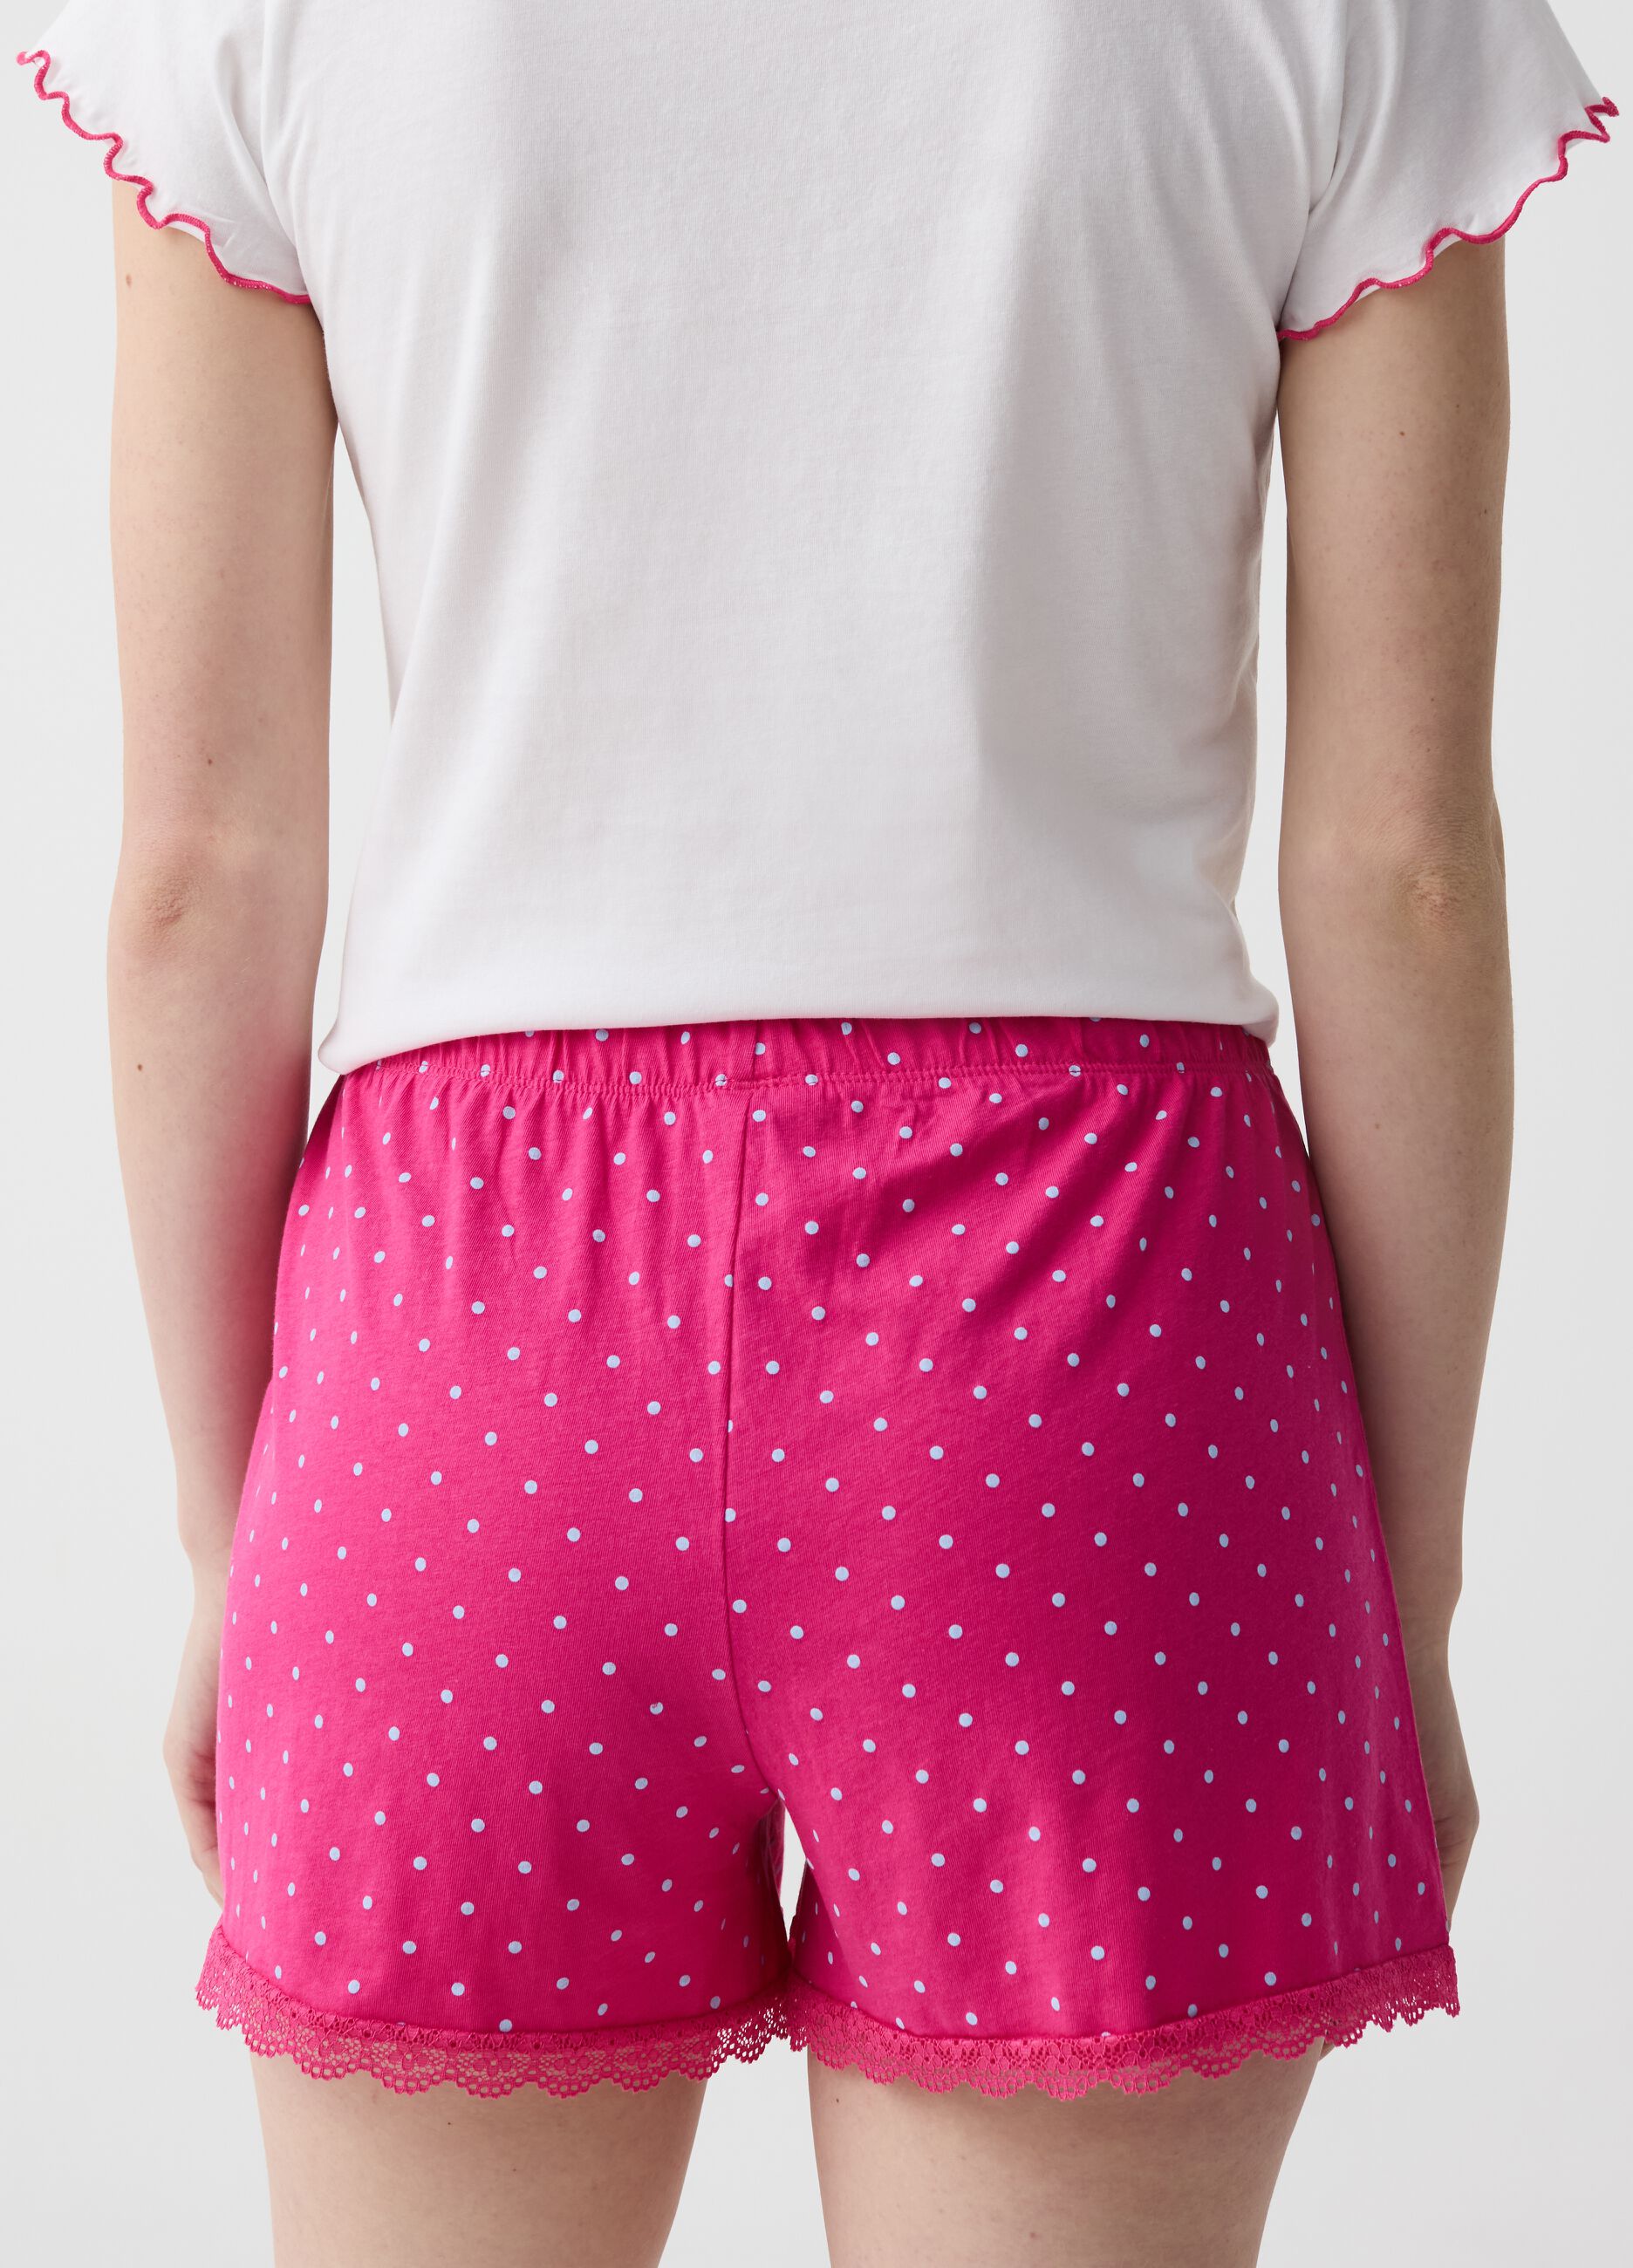 Polka dot pyjama shorts with lace